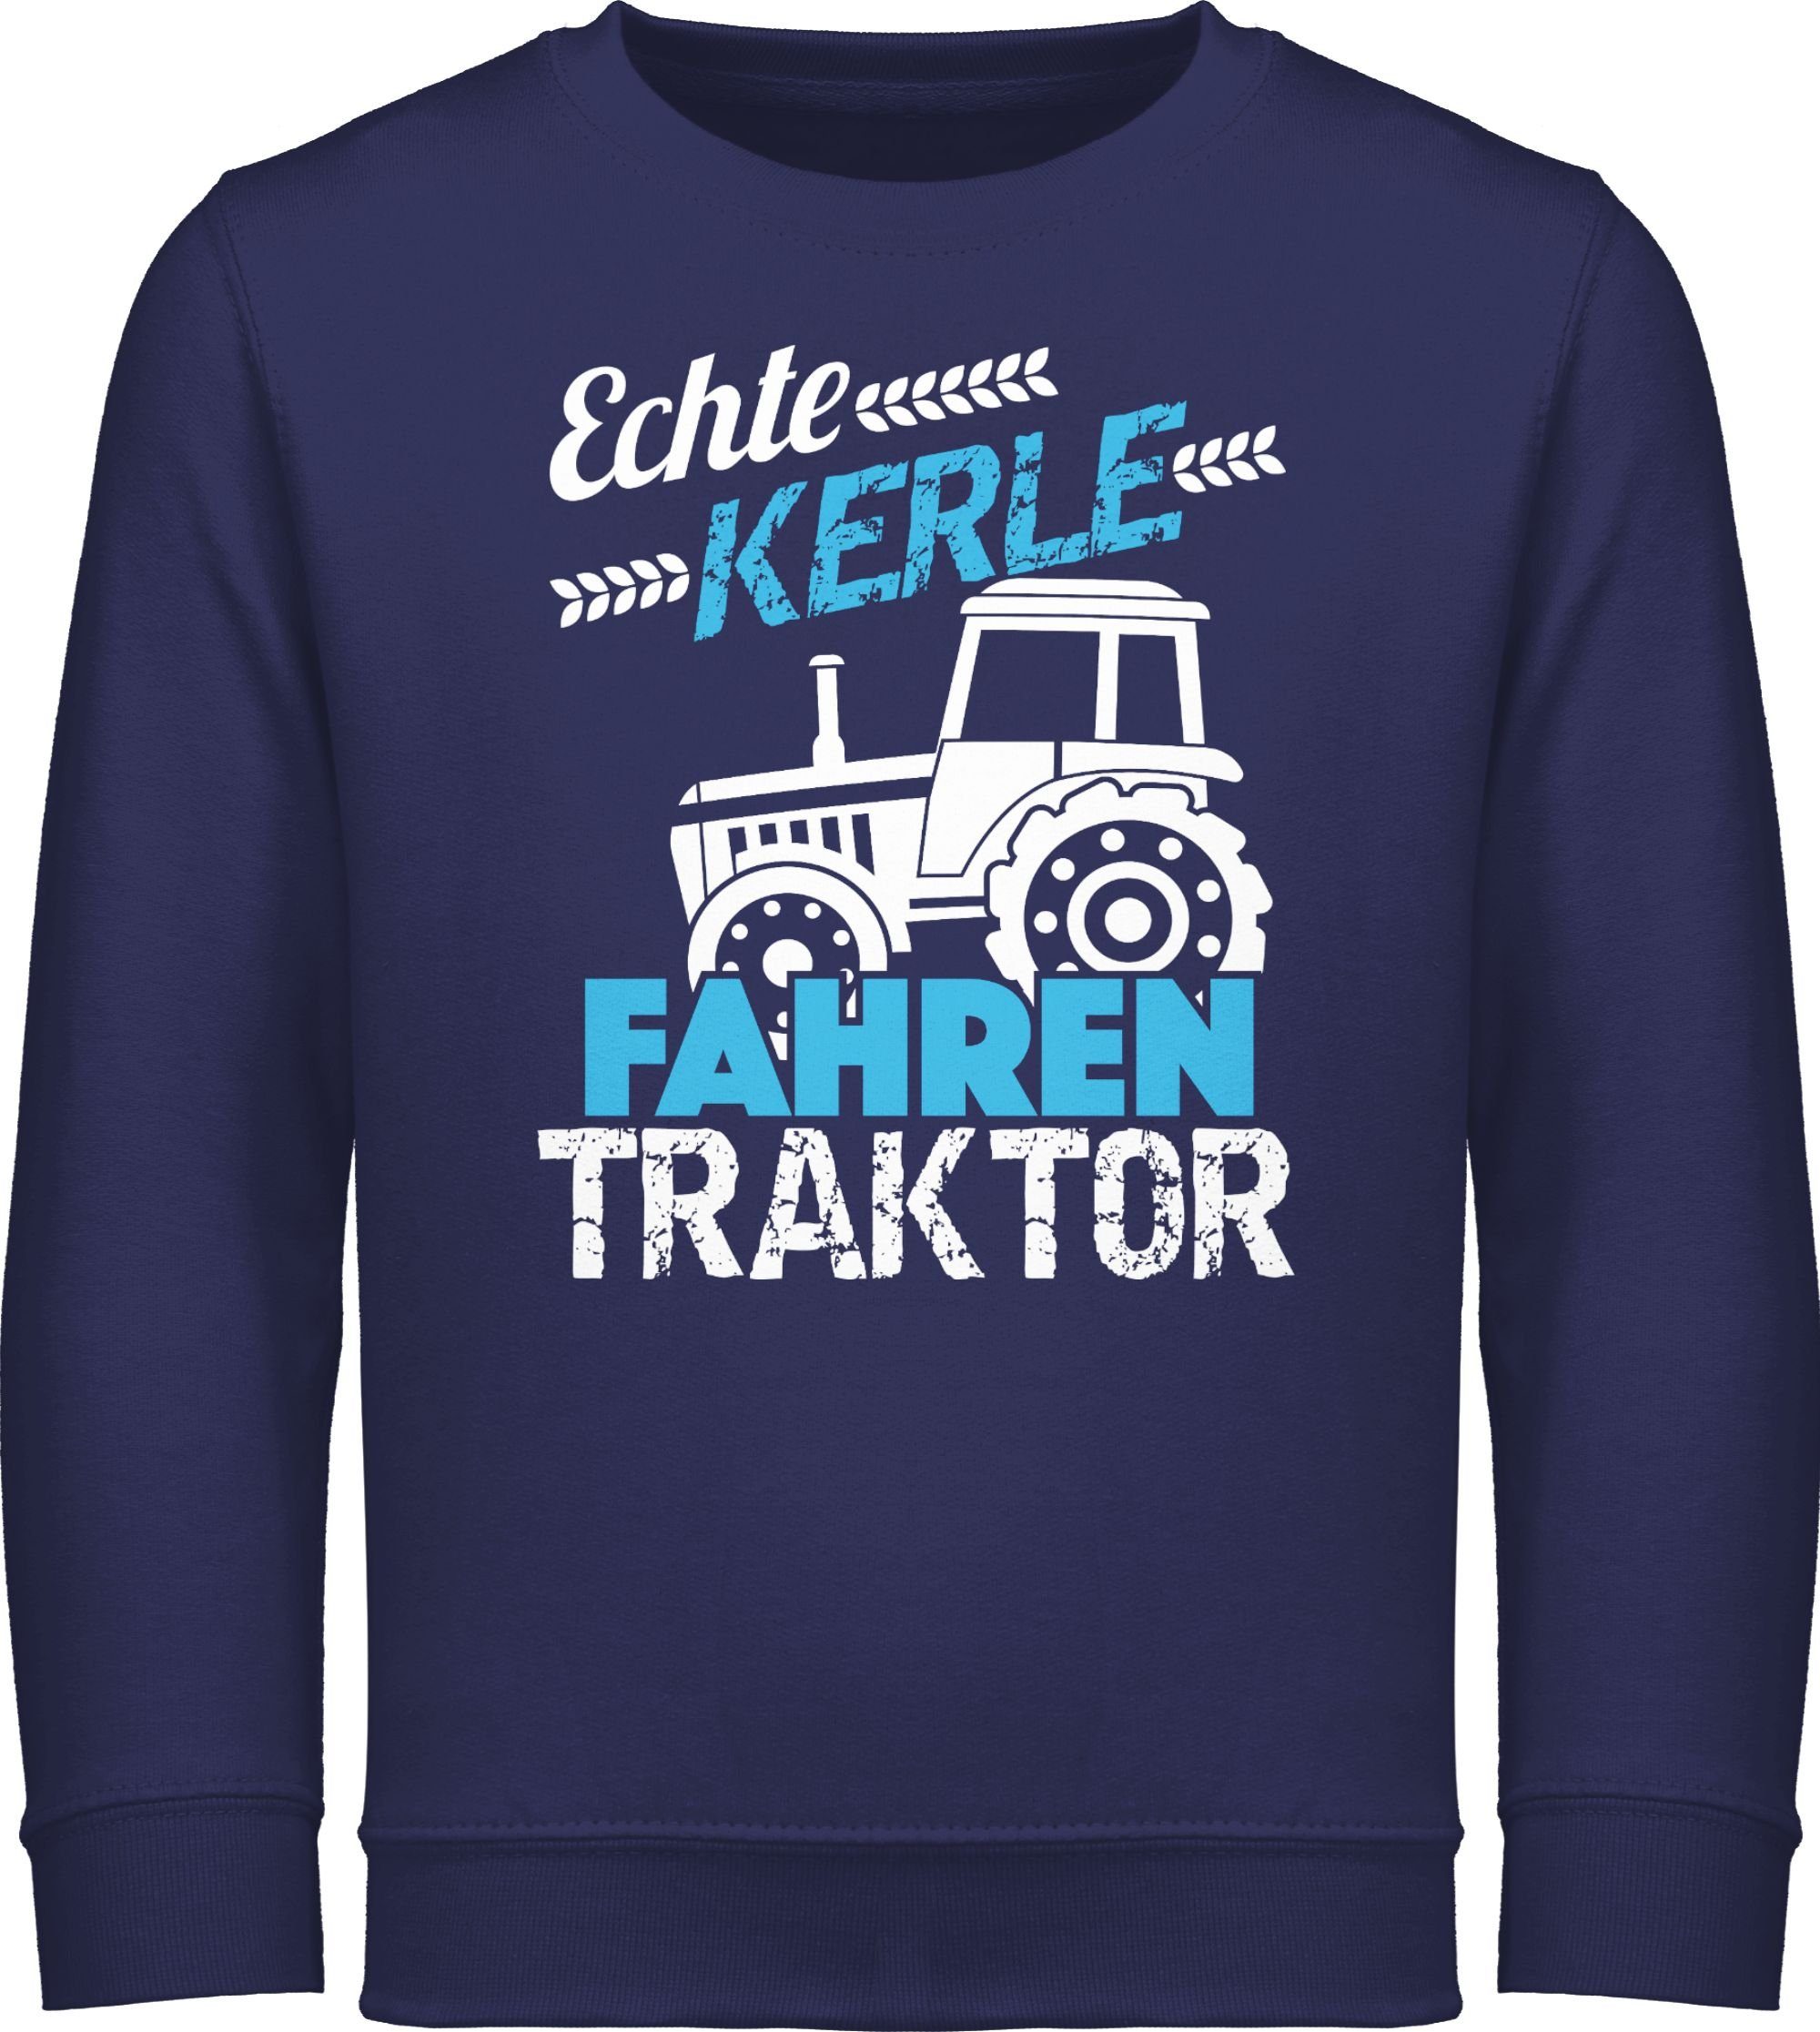 Shirtracer Sweatshirt Echte Kerle fahren Traktor Traktor 2 Navy Blau